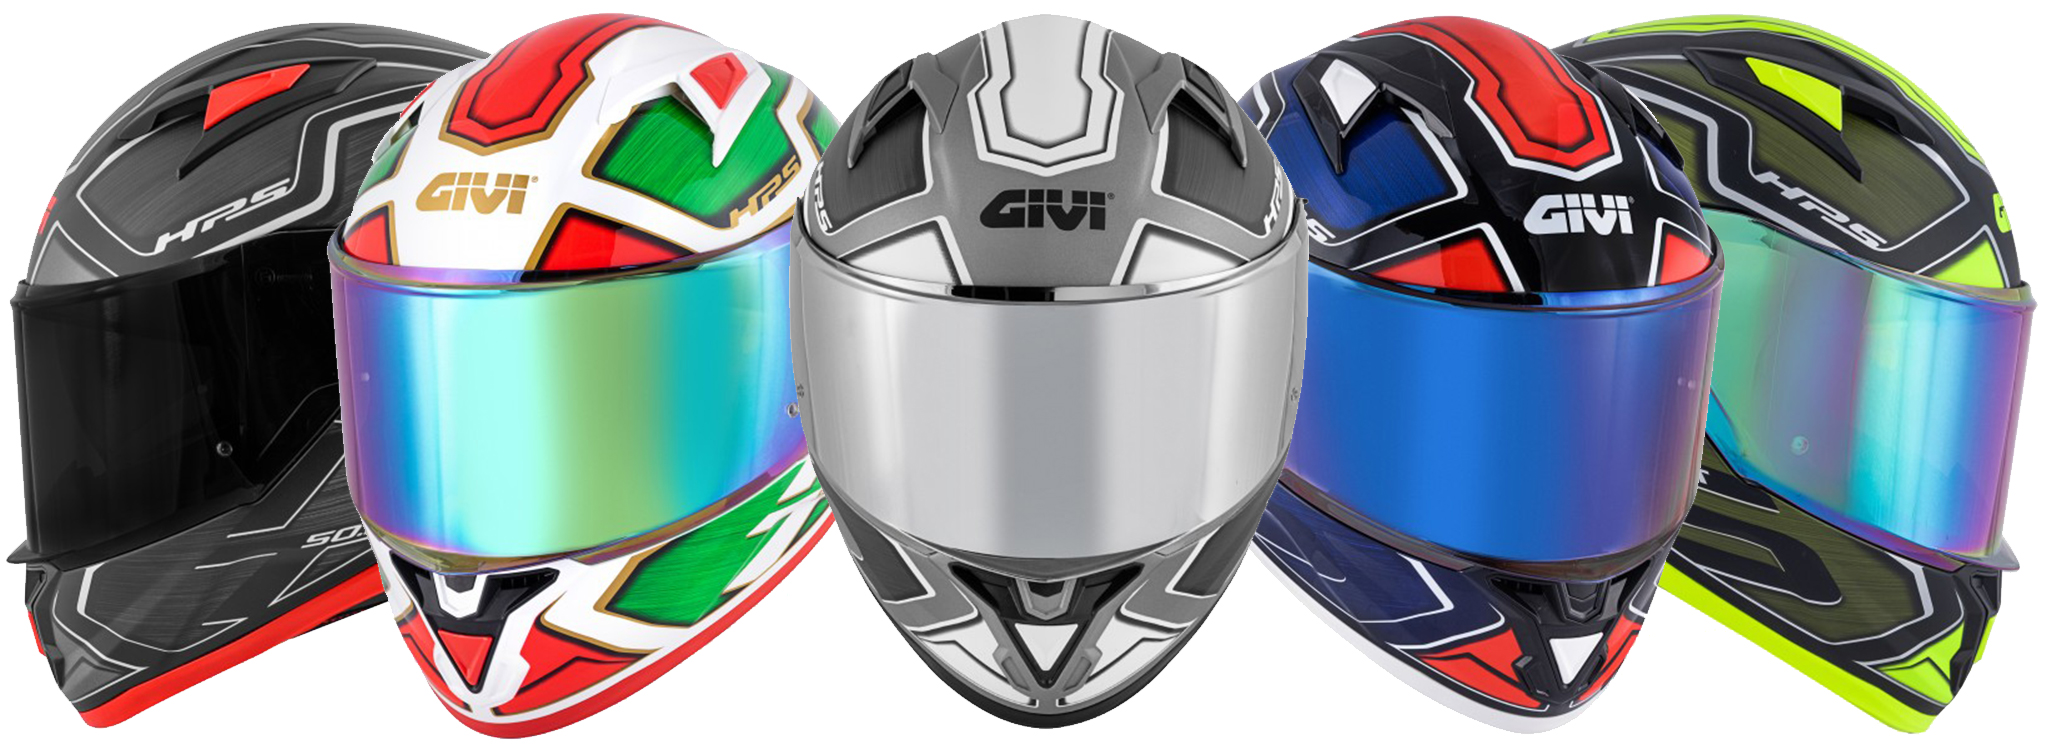 Givi Introduces Limited-Edition Sport Deep Helmet | vlr.eng.br